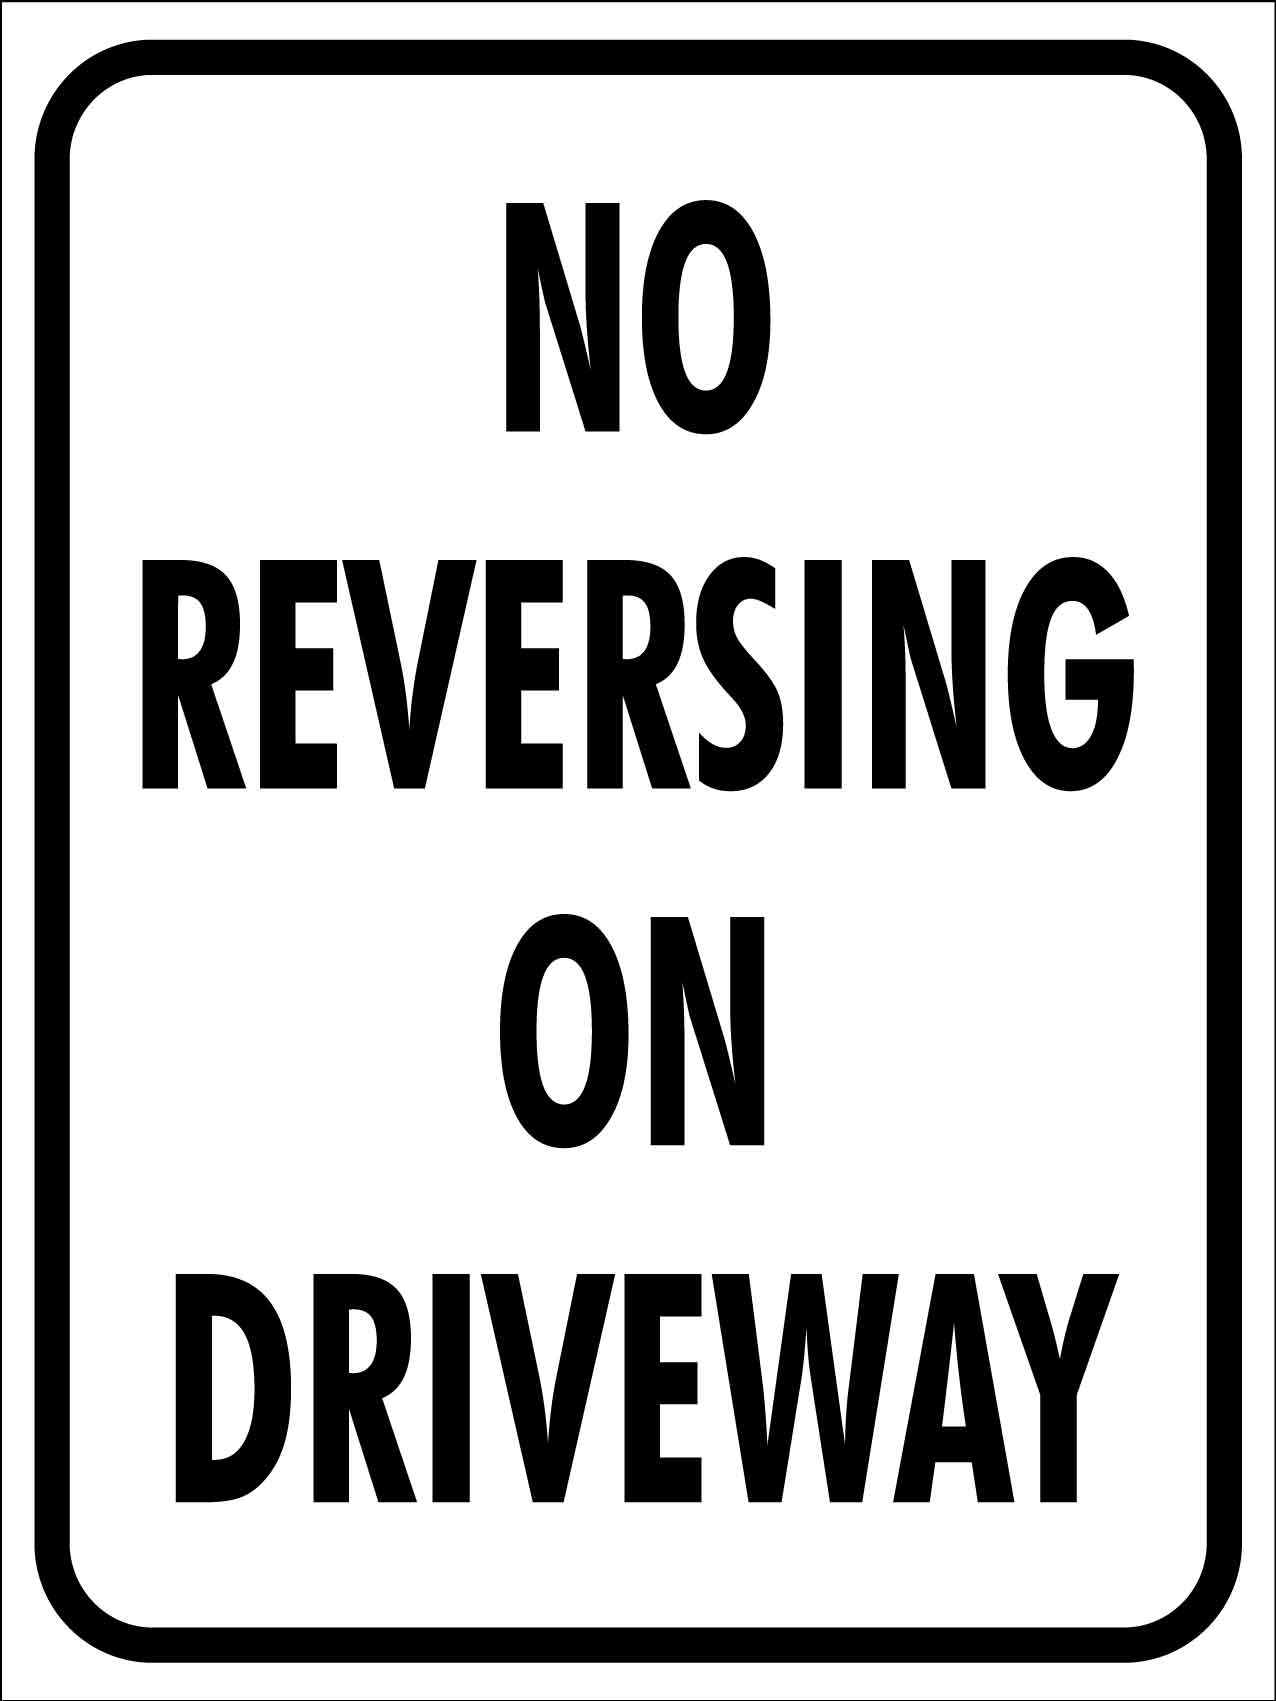 No Reversing On Driveway Sign